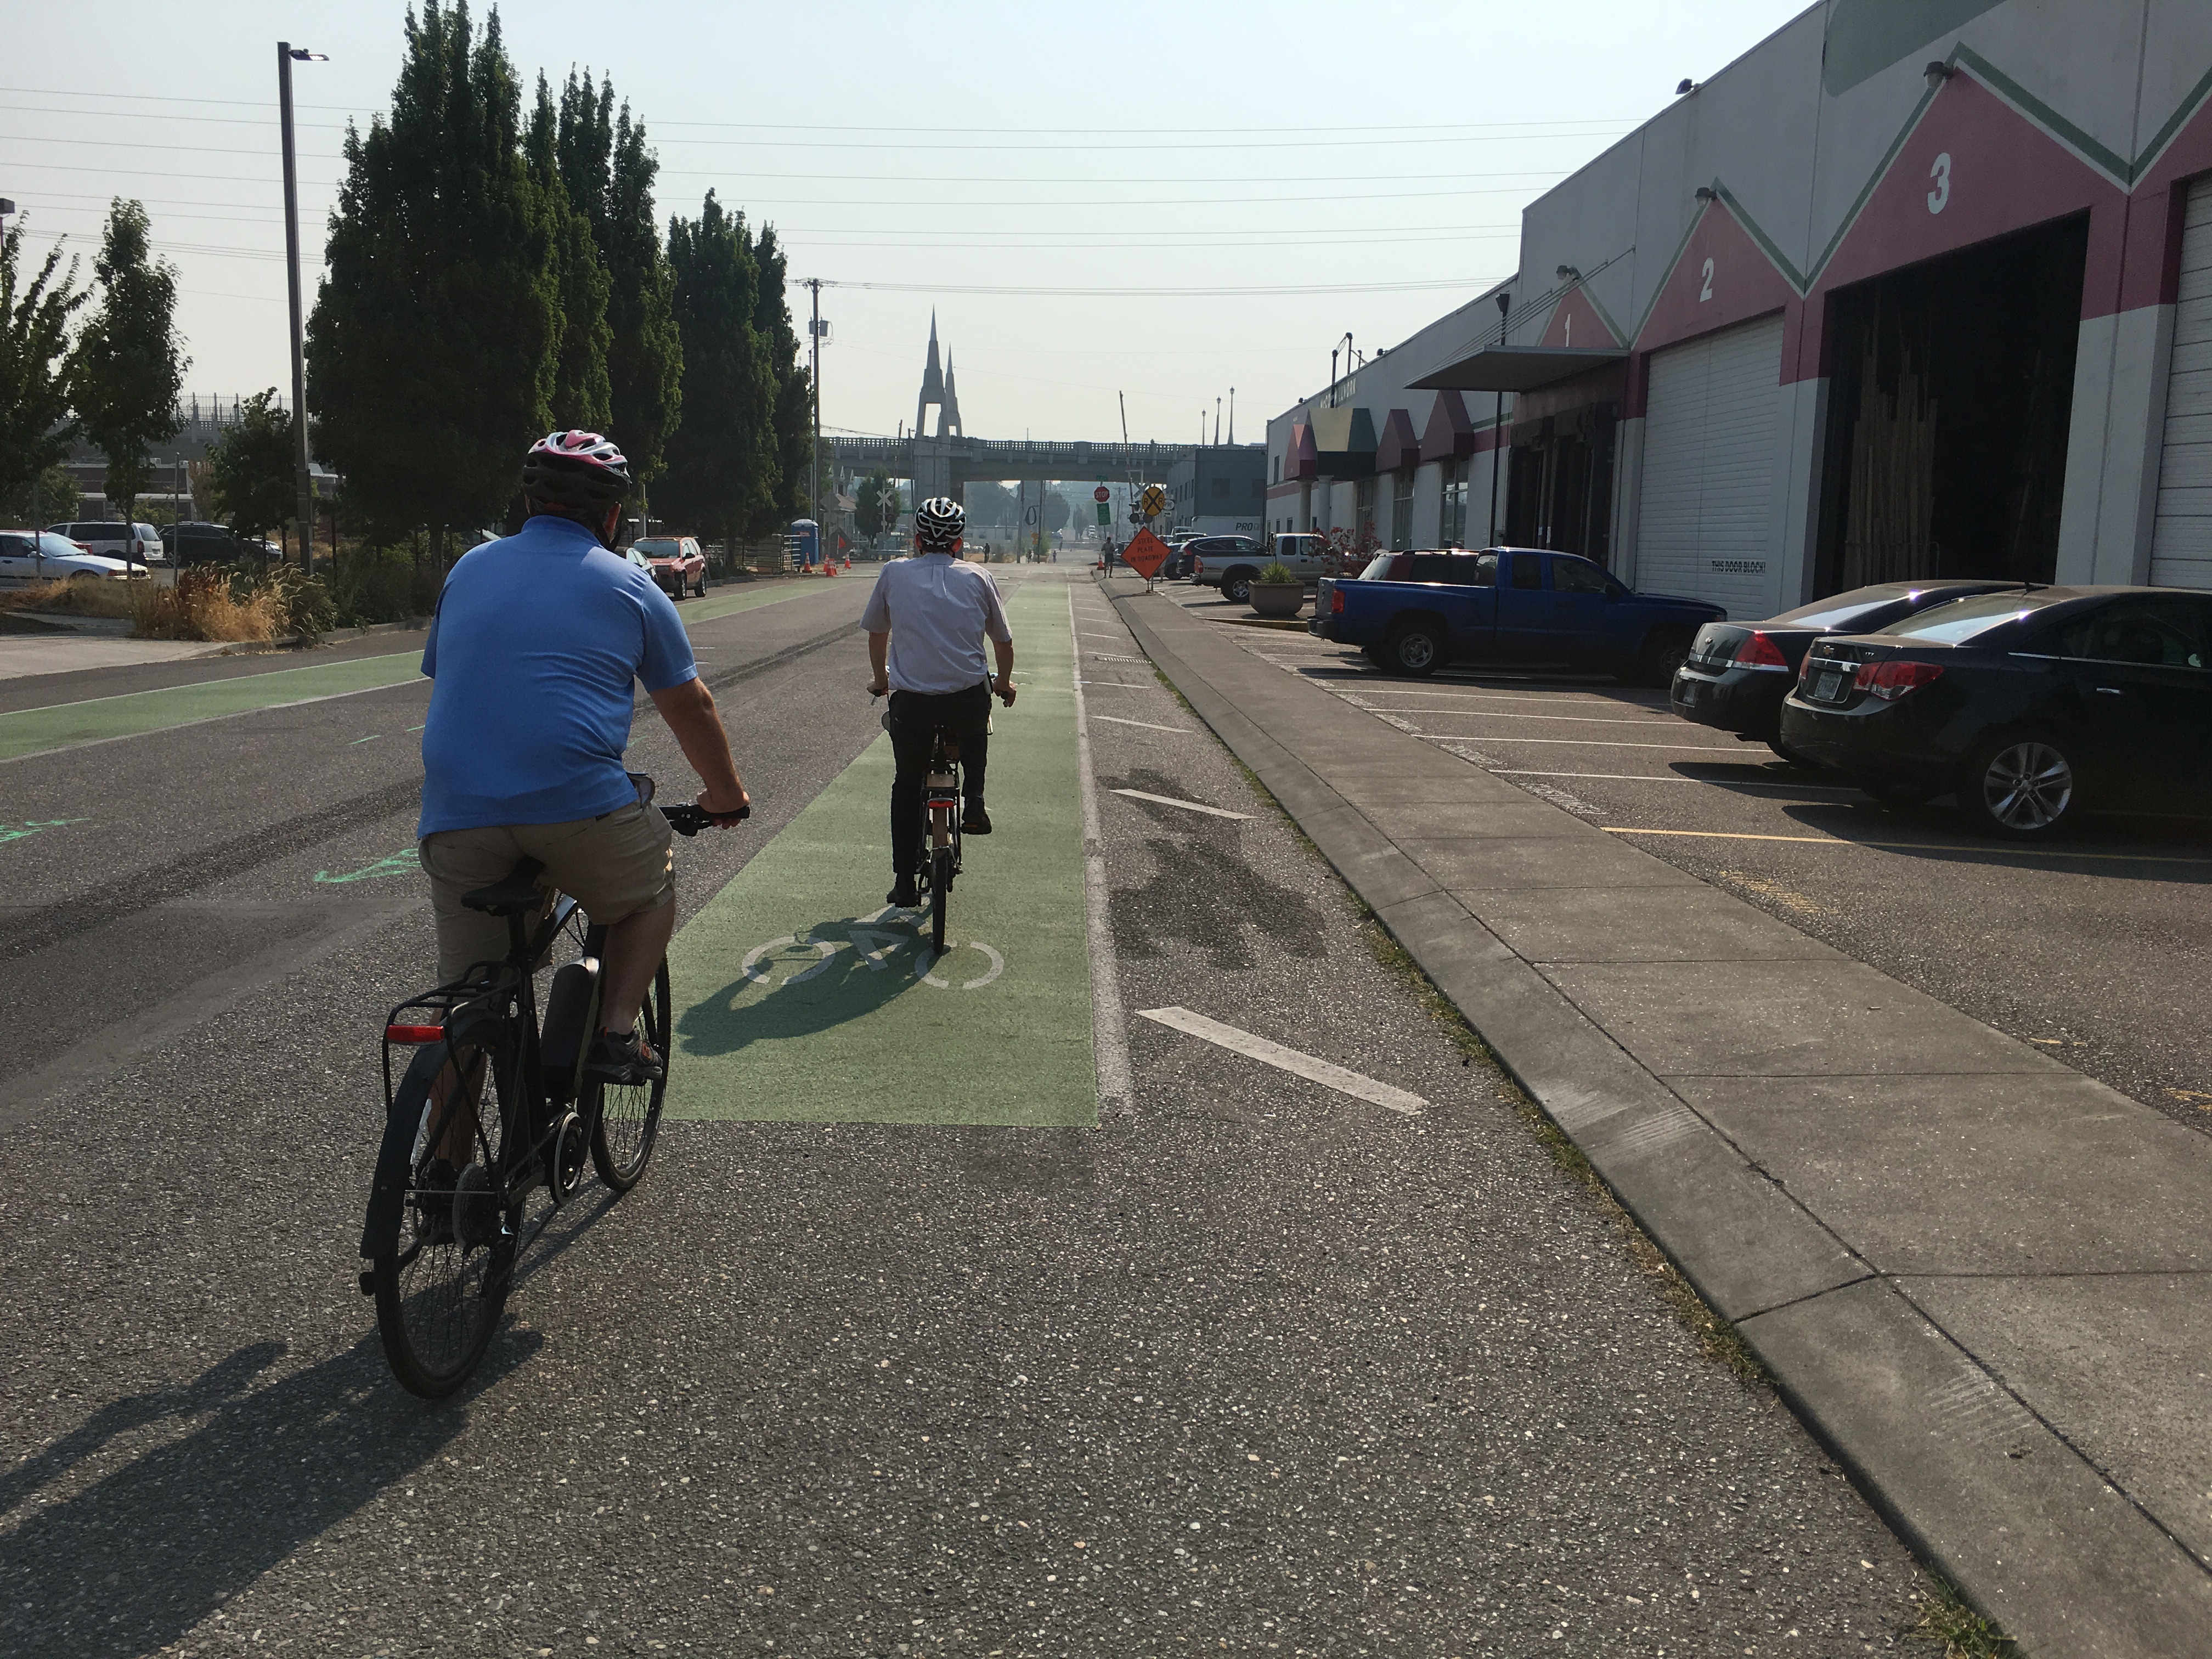 Individuals riding their bikes on a marked bike lane